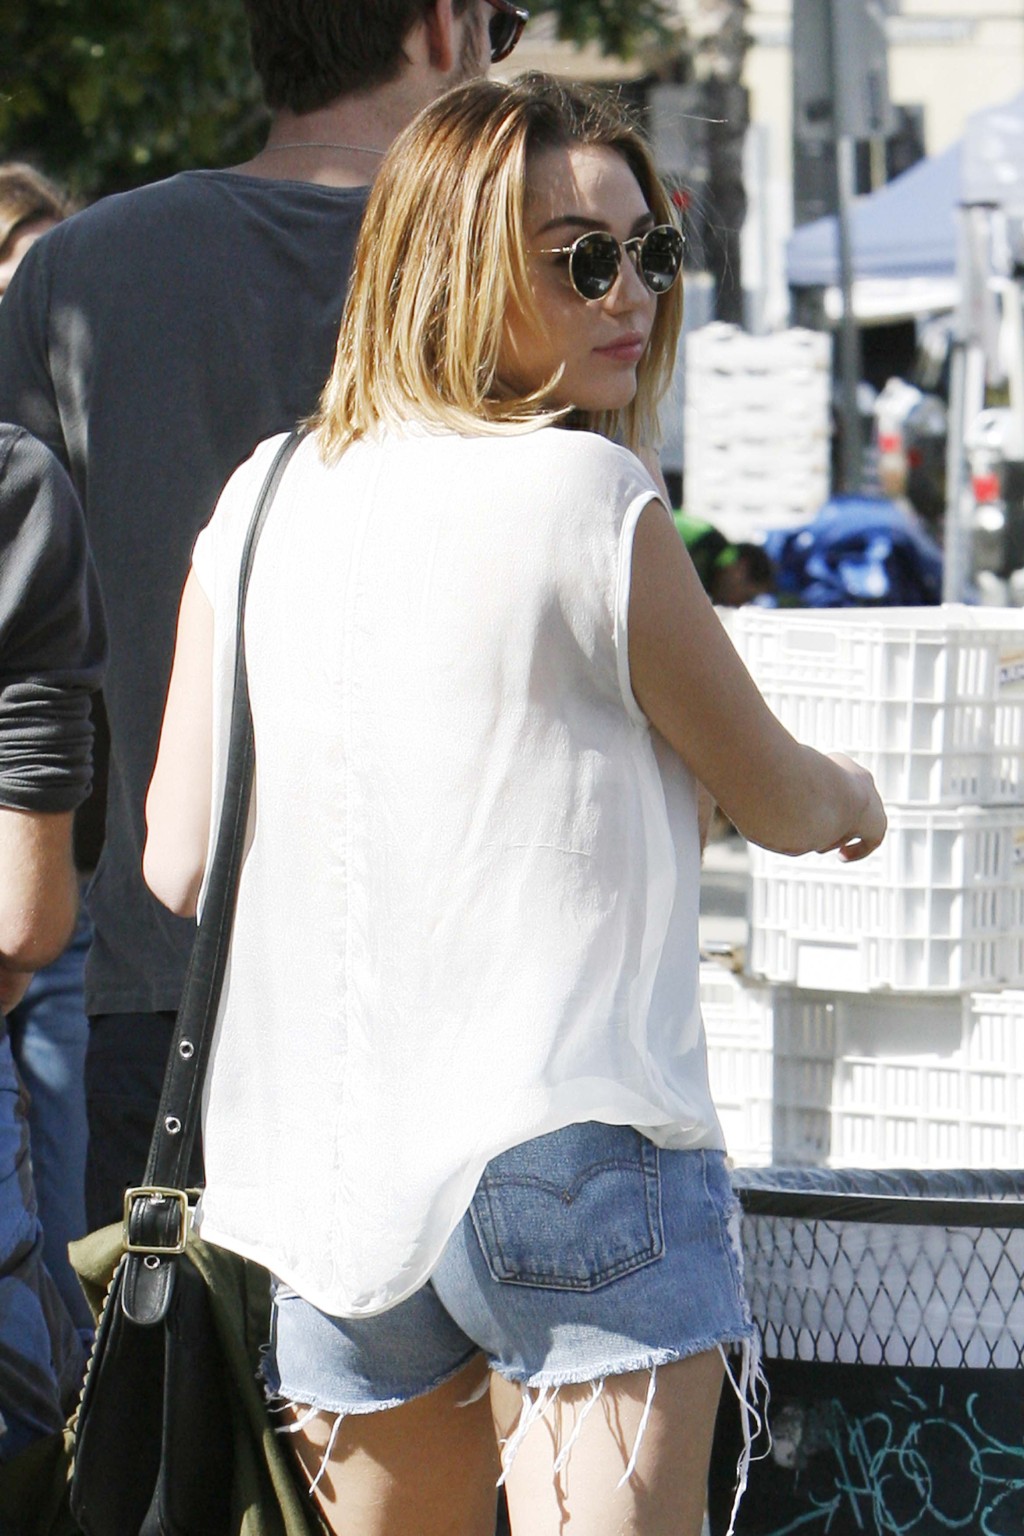 Miley Cyrus bra peak while shopping at the farmer's market in LA #75274002